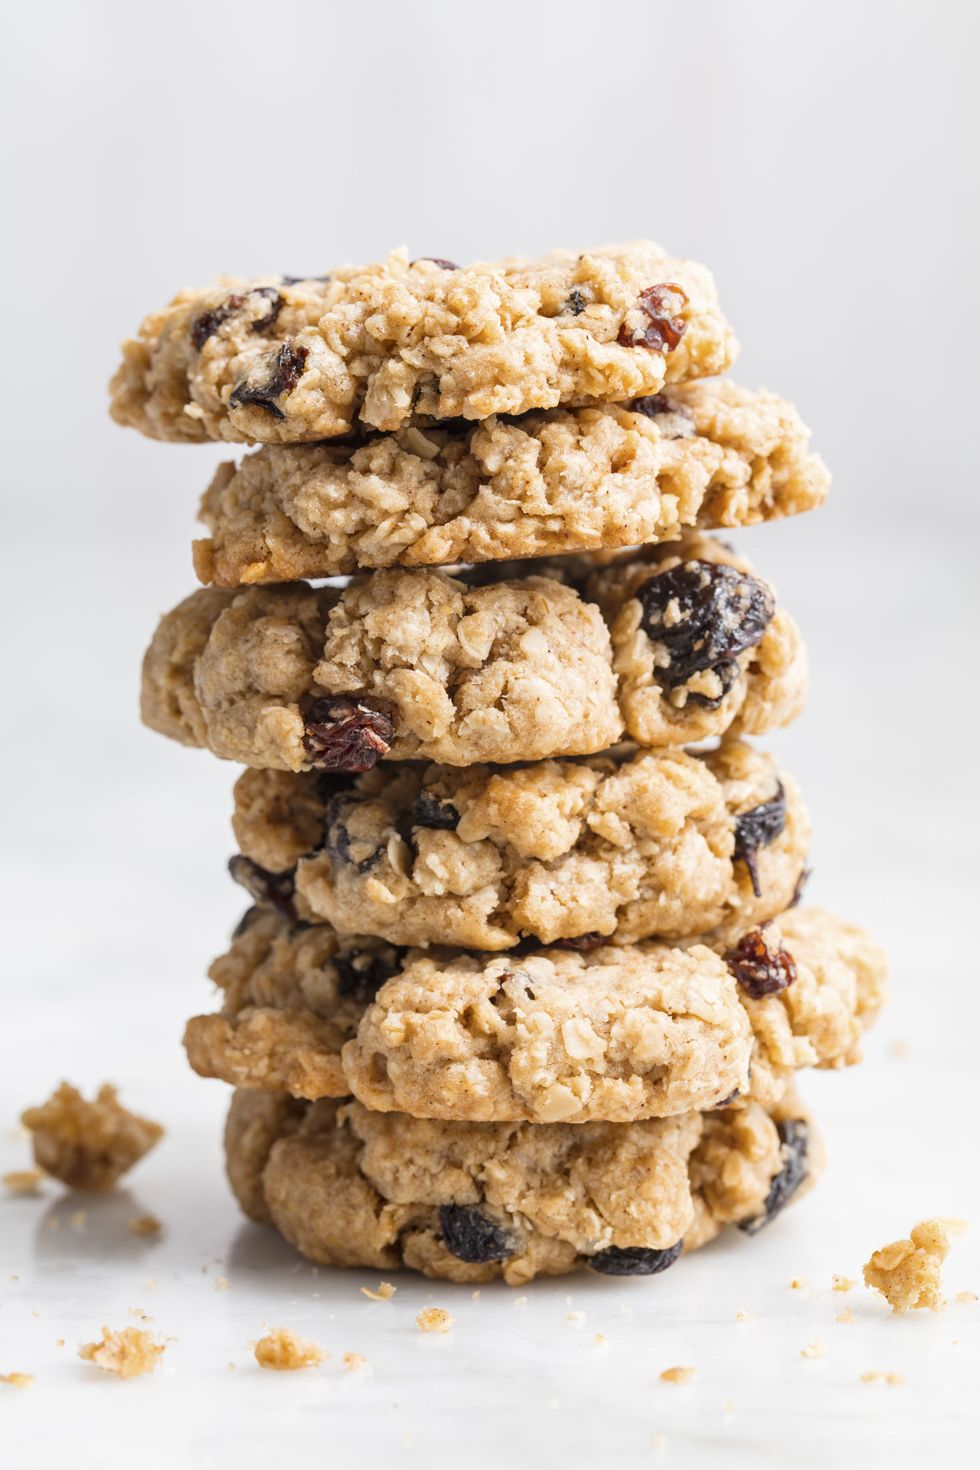 Best Oatmeal Raisin Cookies Recipe - How to Make Oatmeal Raisin Cookies